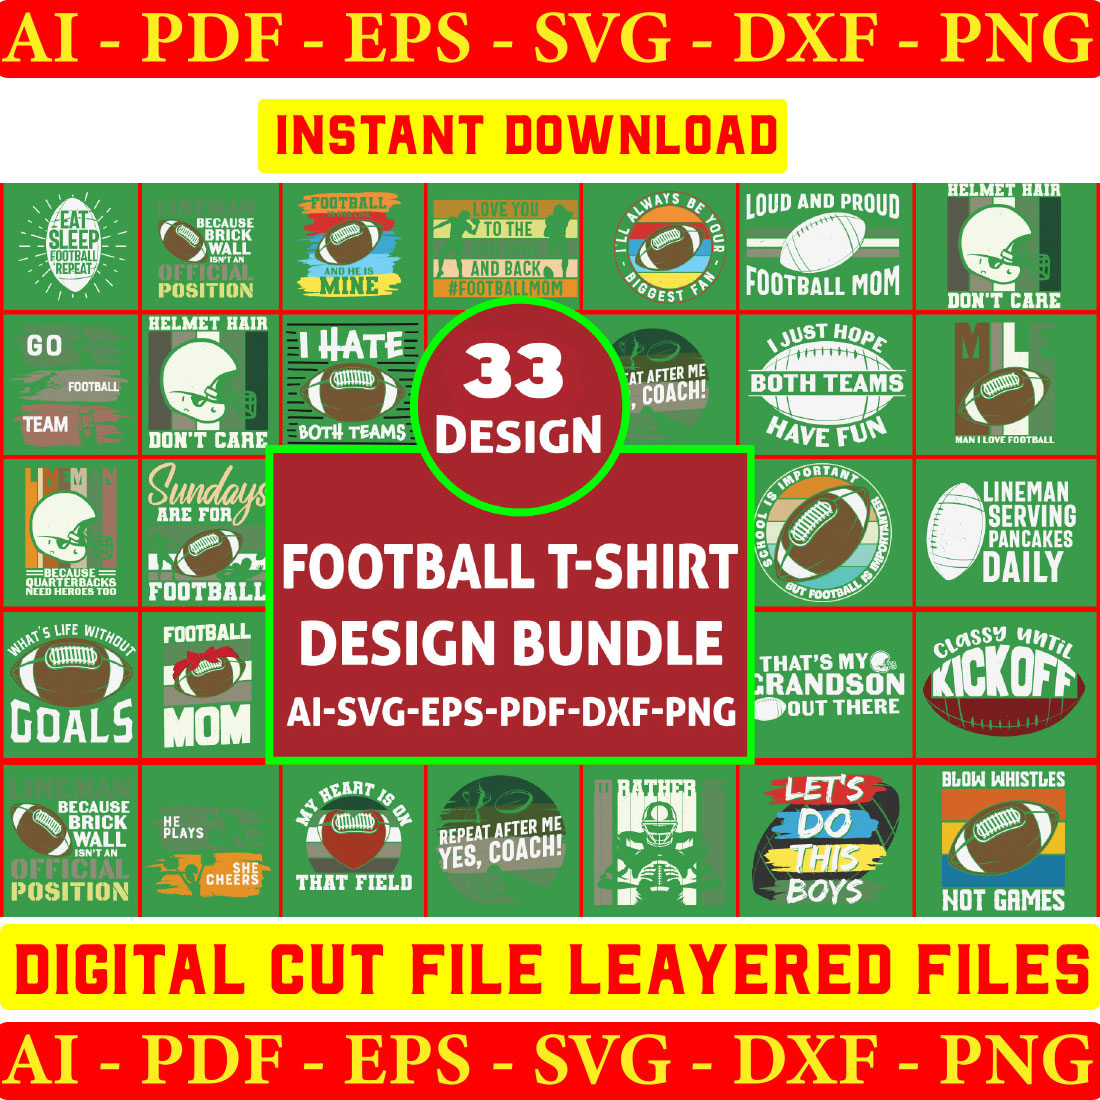 Football T-shirt Design Bundle cover image.